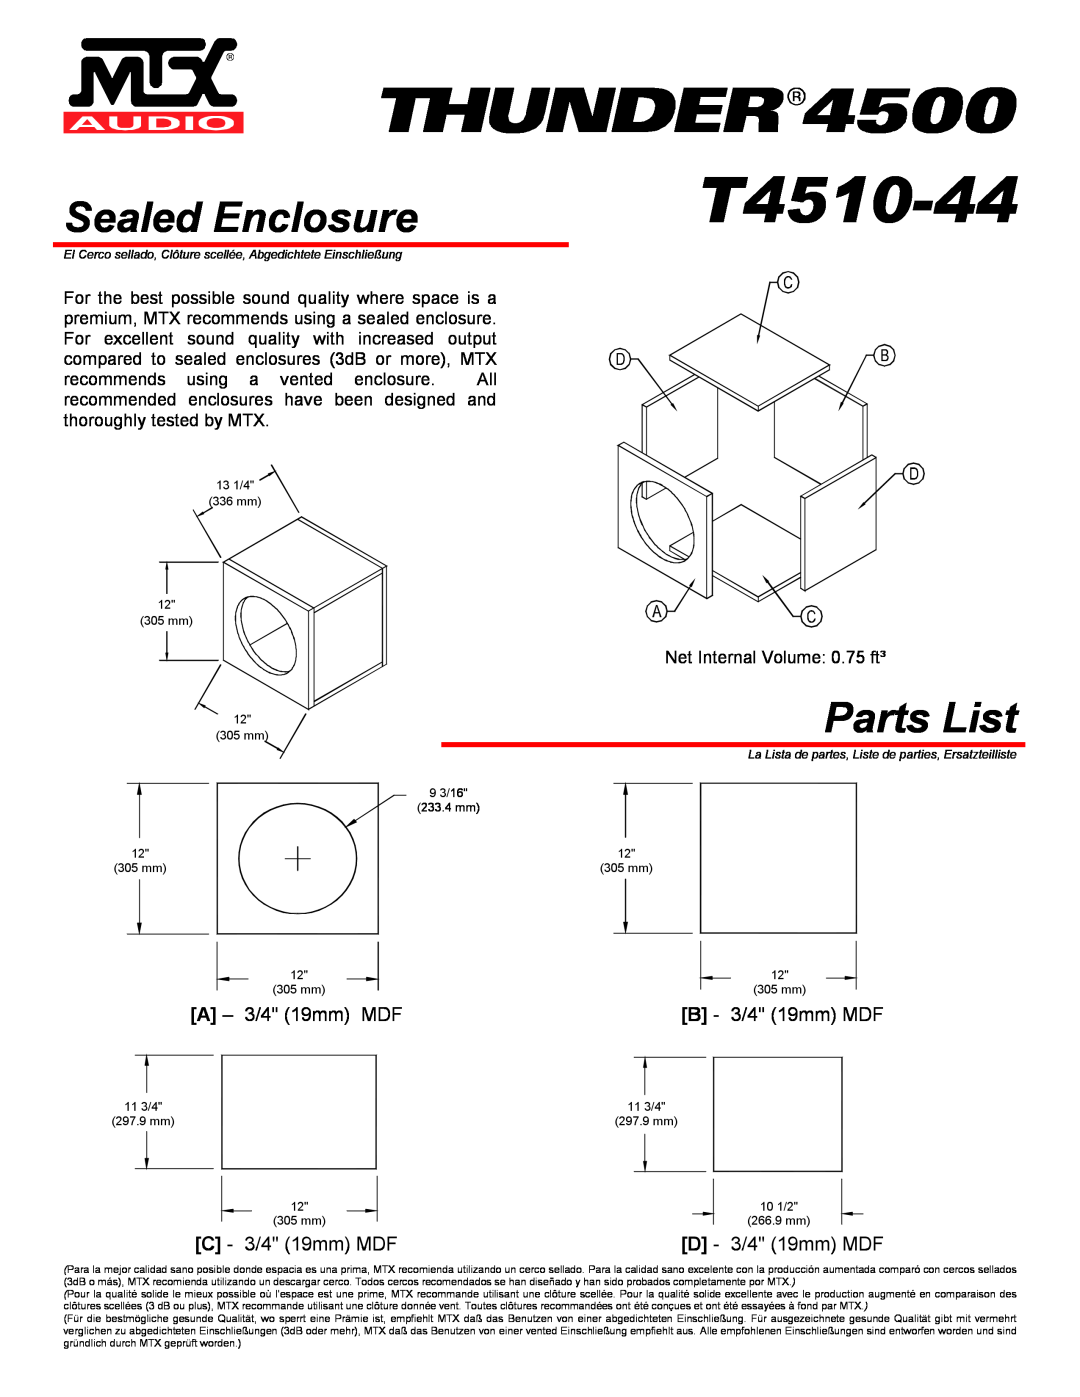 MTX Audio T4510-44 Sealed Enclosure, Parts List, A - 3/4 19mm MDF, B - 3/4 19mm MDF, C - 3/4 19mm MDF, D - 3/4 19mm MDF 